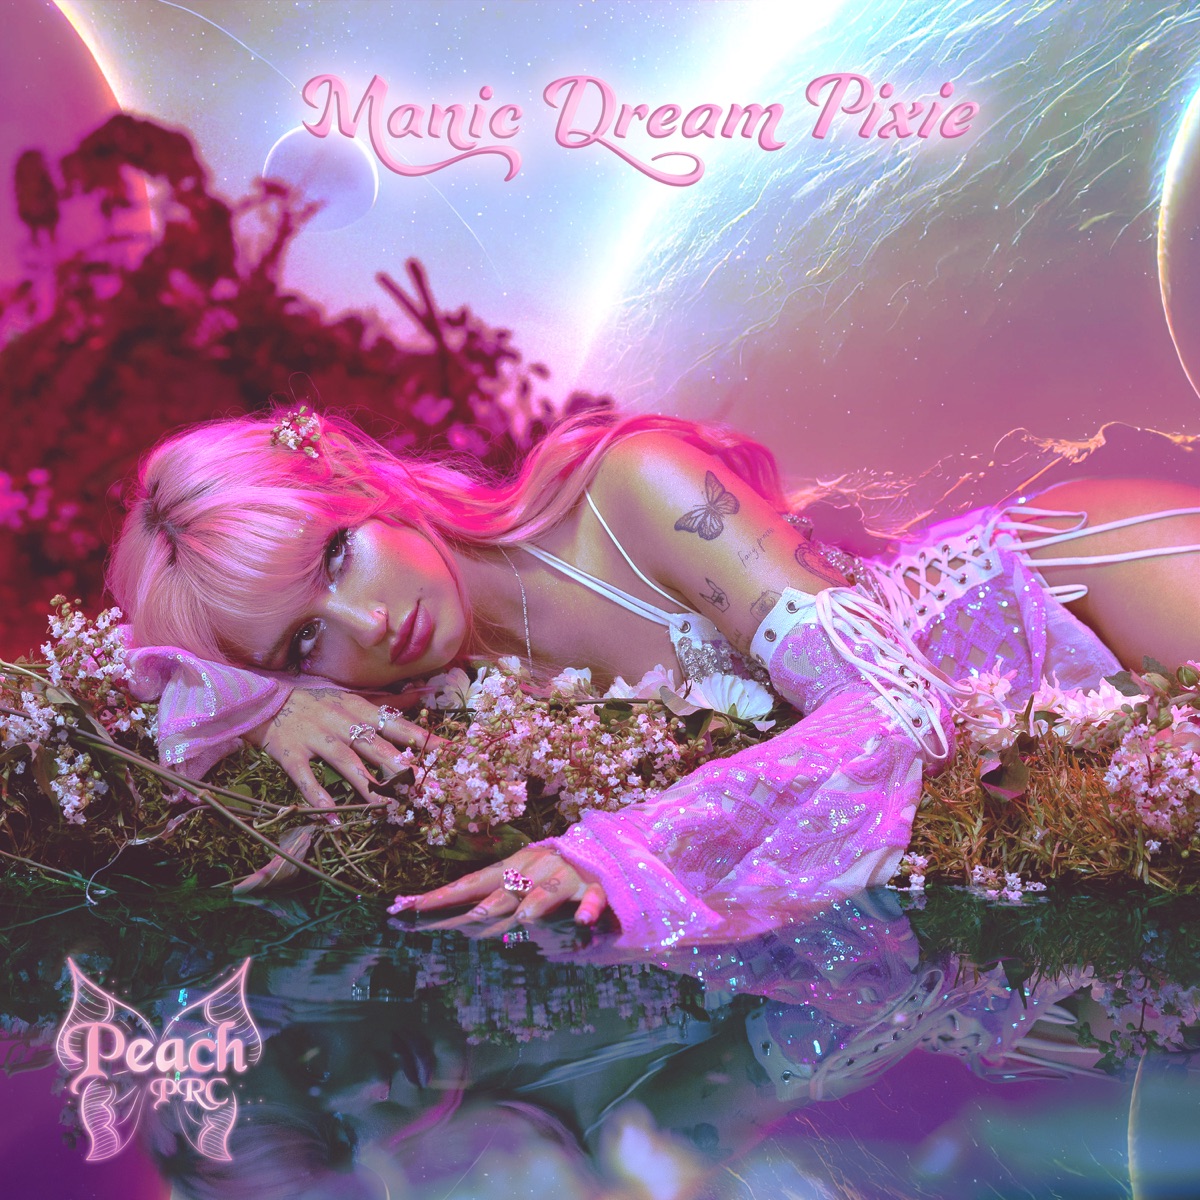 Peach PRC Manic Dream Pixie cover artwork